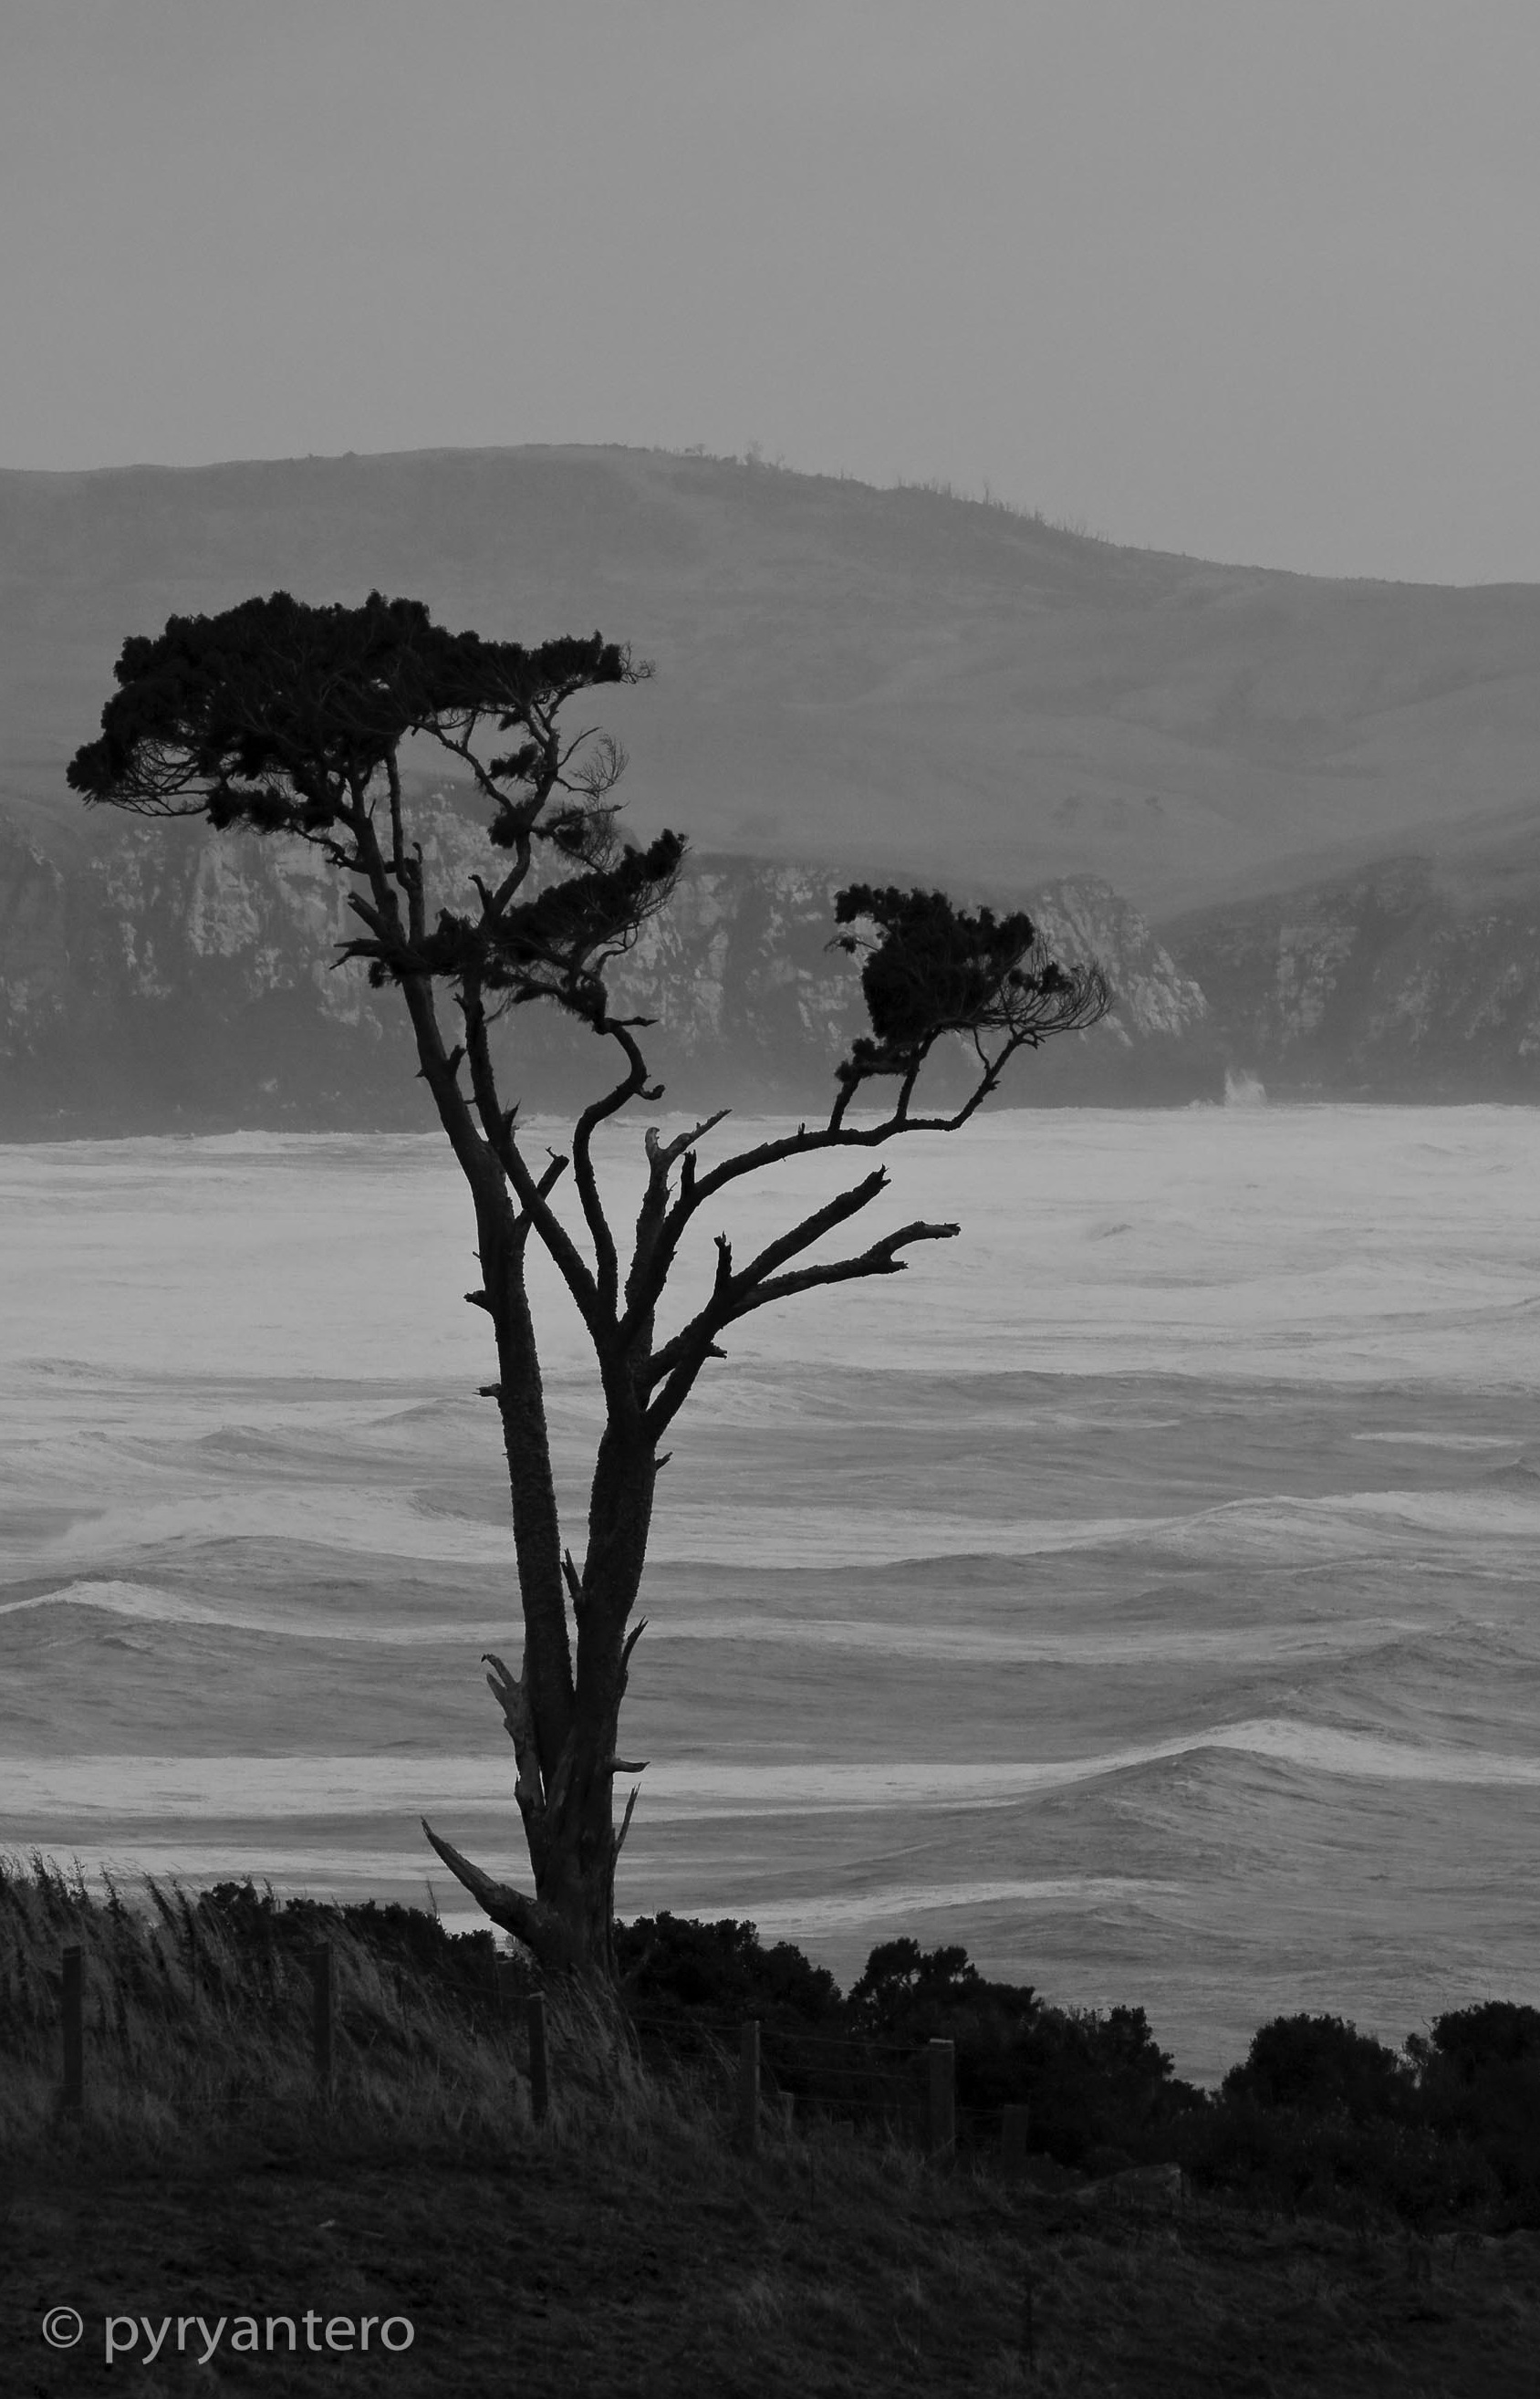 Lonely Tree, South Island, New Zealand. Pyry Antero Pietiläinen Photography, pyryantero